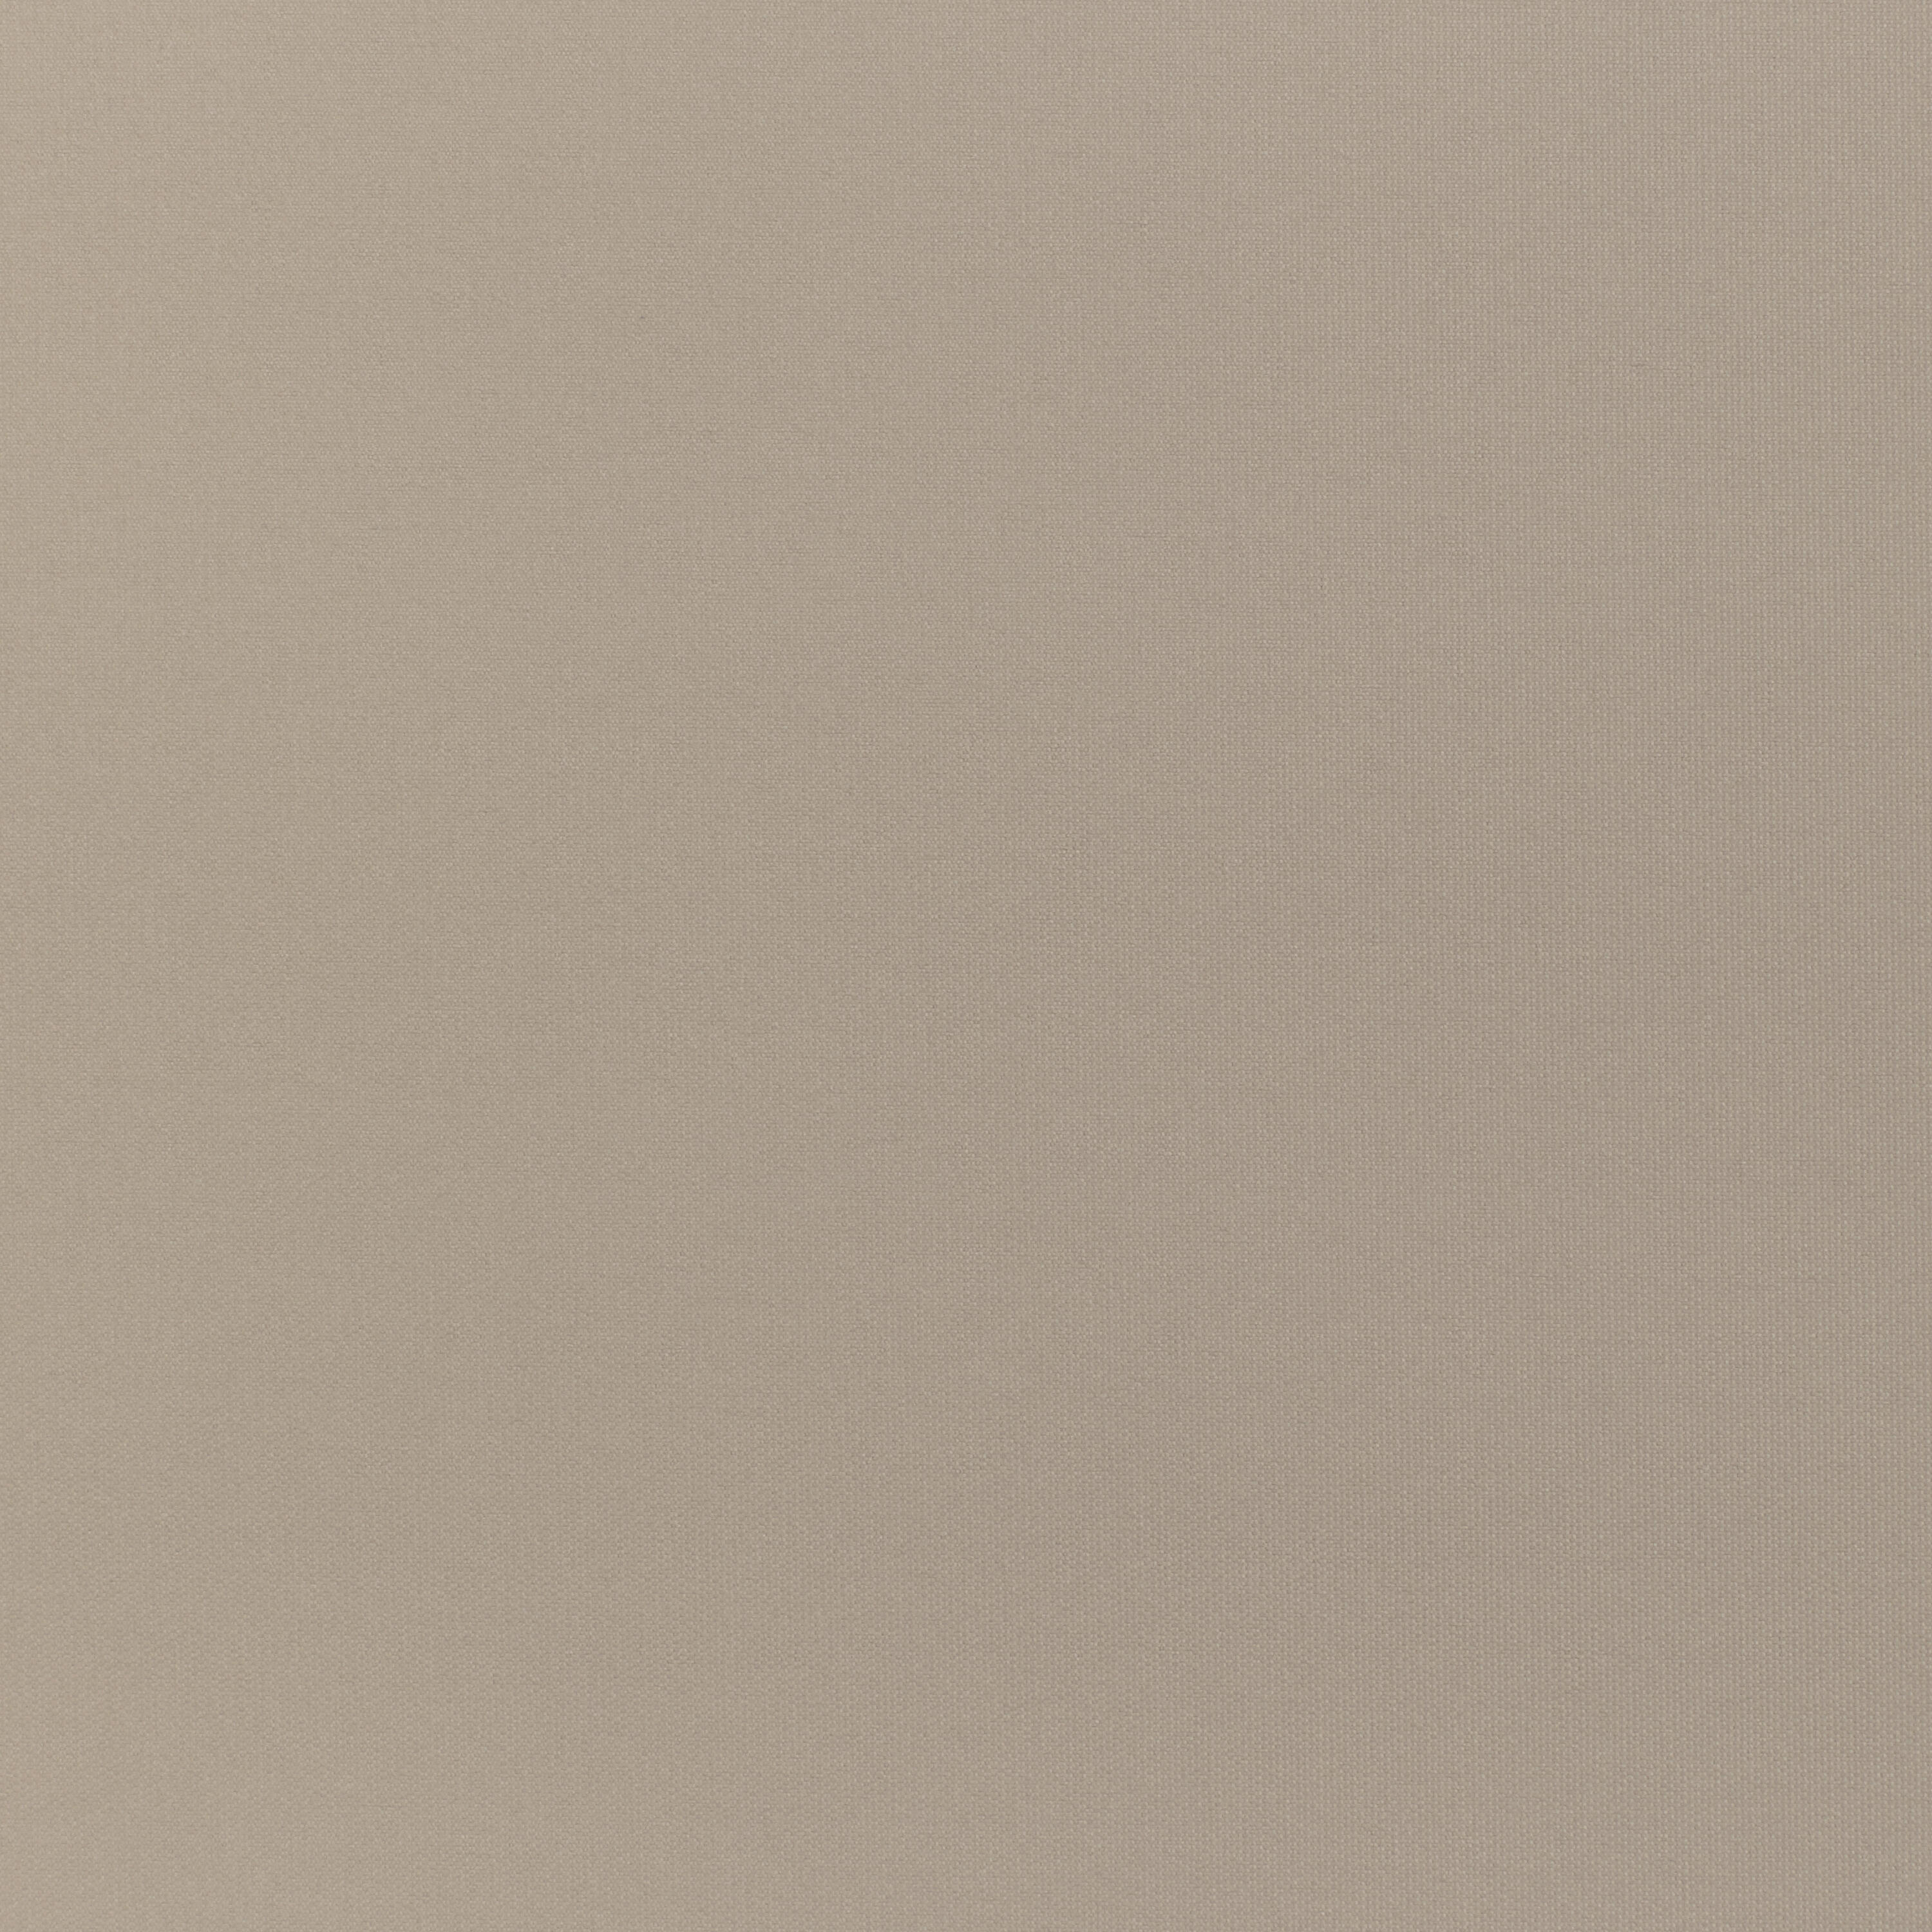 Tenda a rullo oscurante INSPIRE Tokyo beige 60 x 250 cm - 1